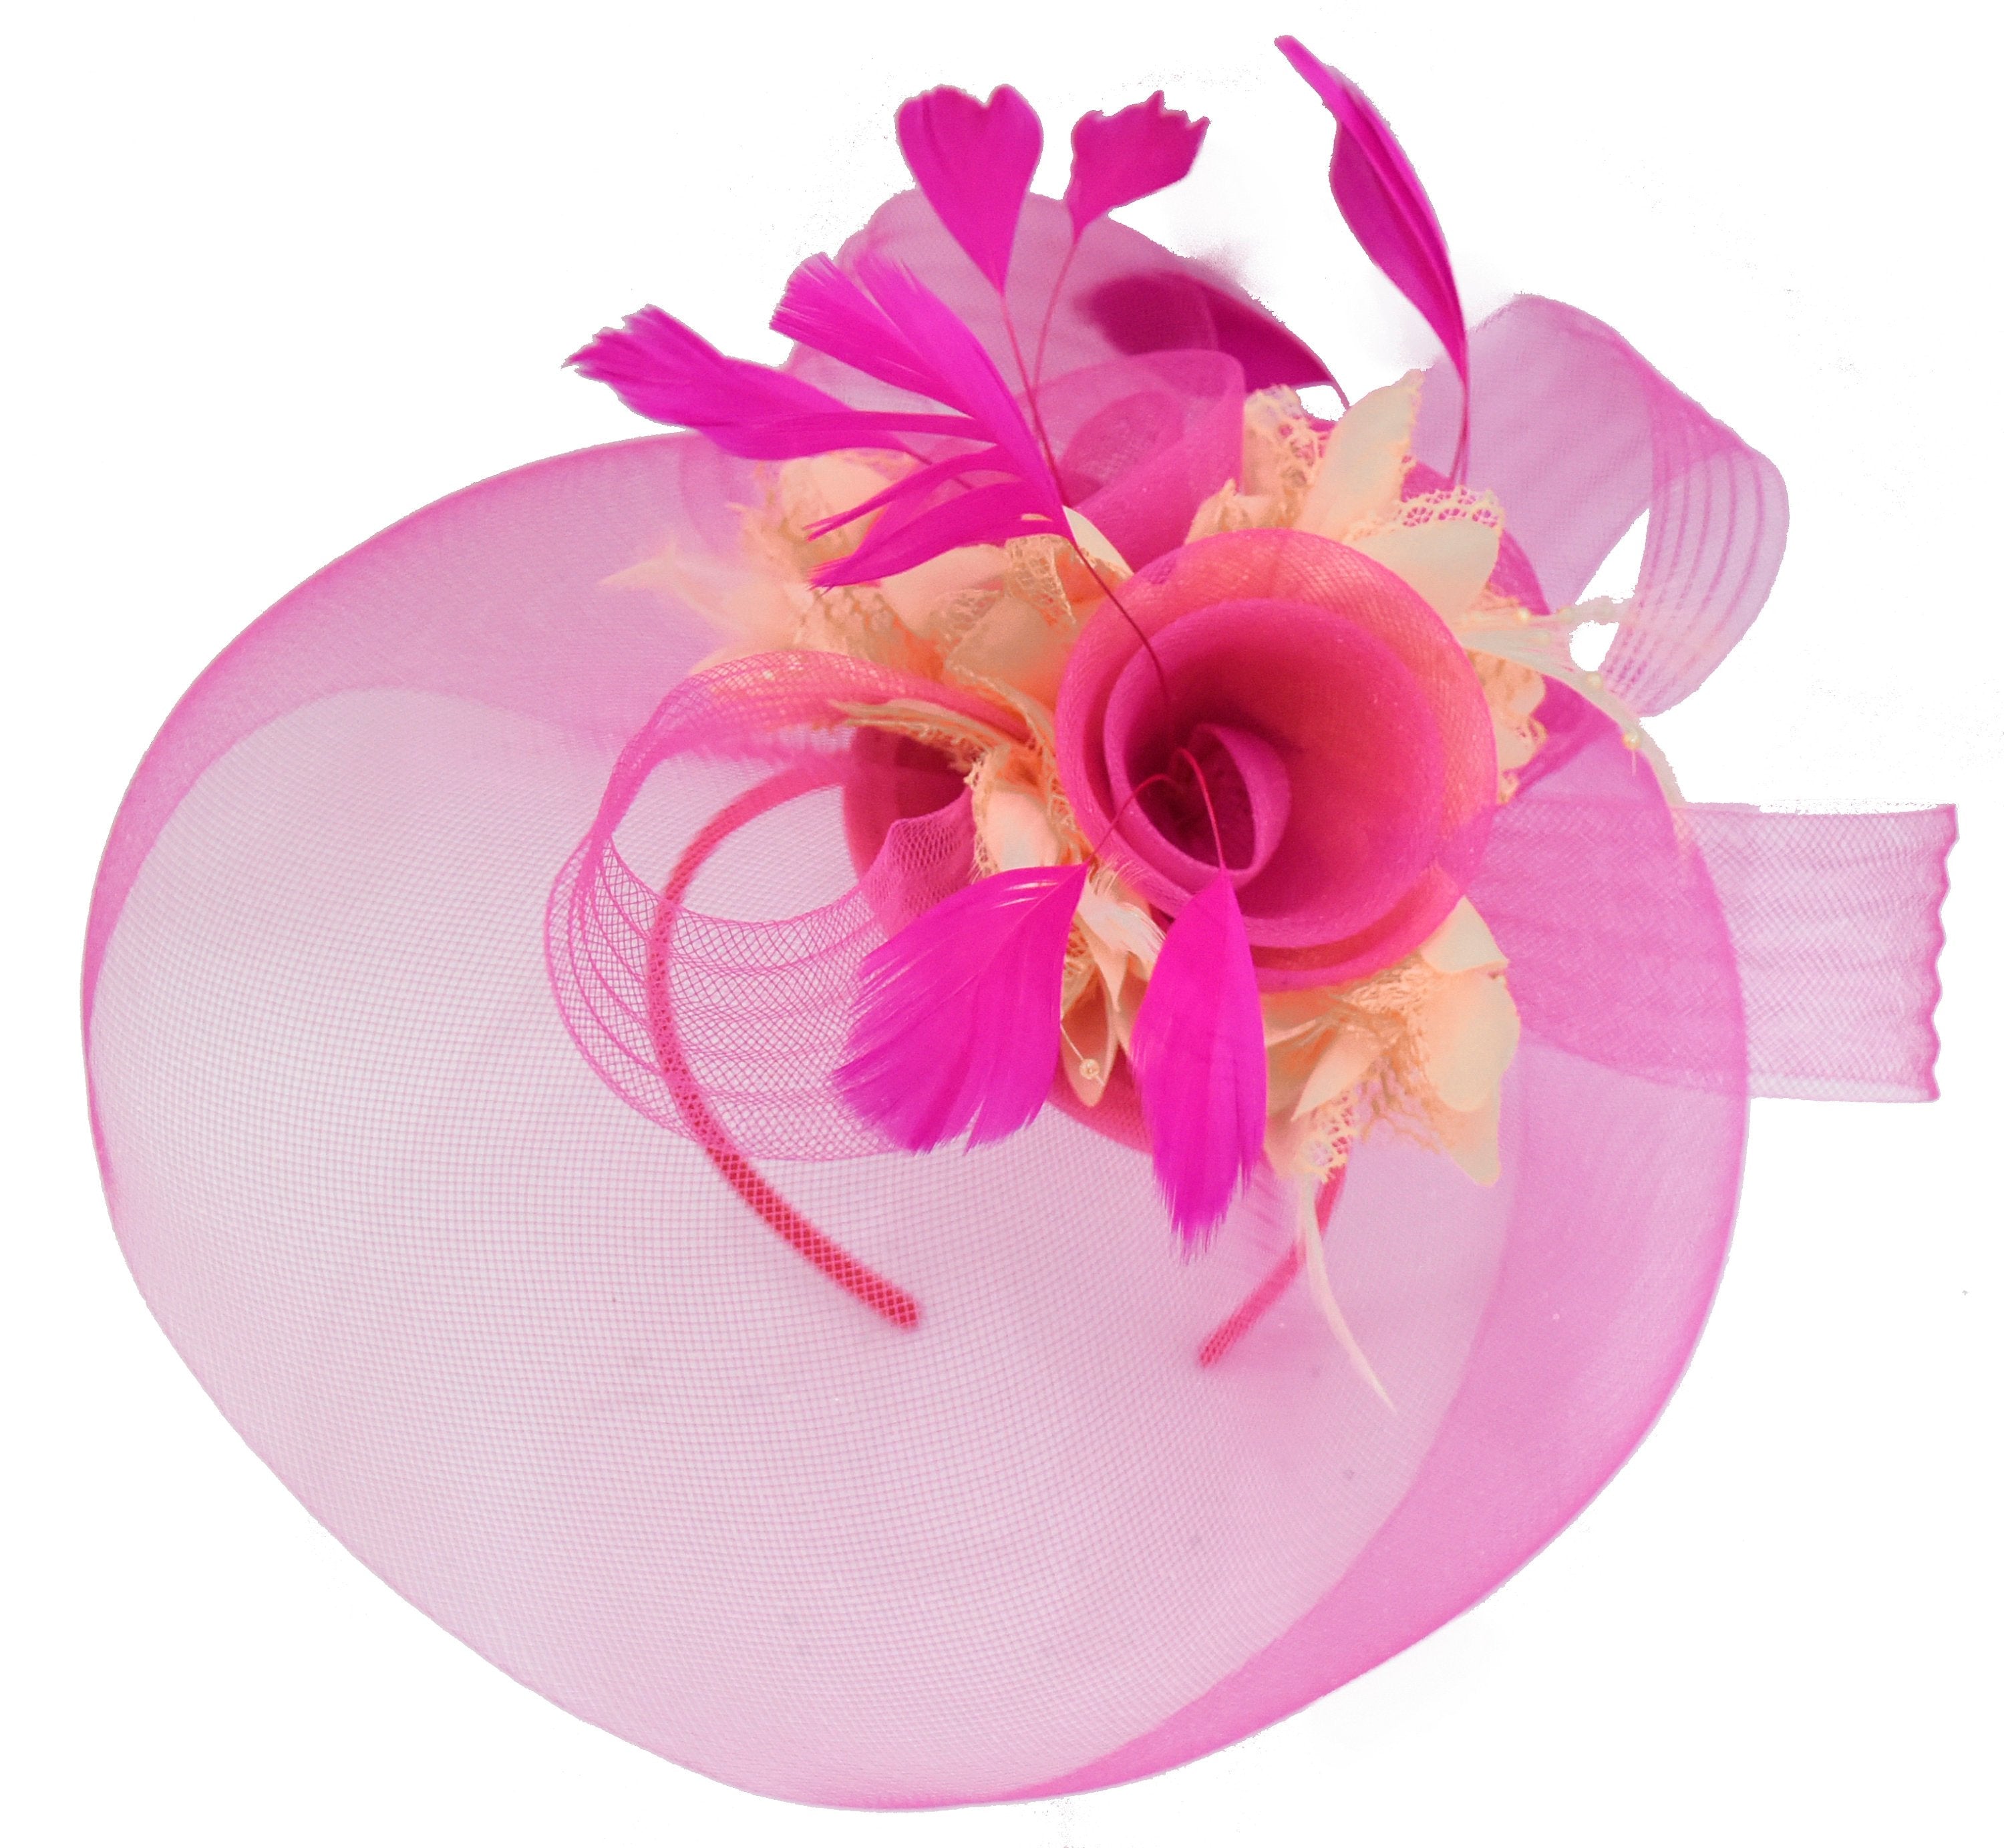 Caprilite Fuchsia Hot Pink and Beige Fascinator Hat Veil Net Hair Clip Ascot Derby Races Wedding Headband Feather Flower